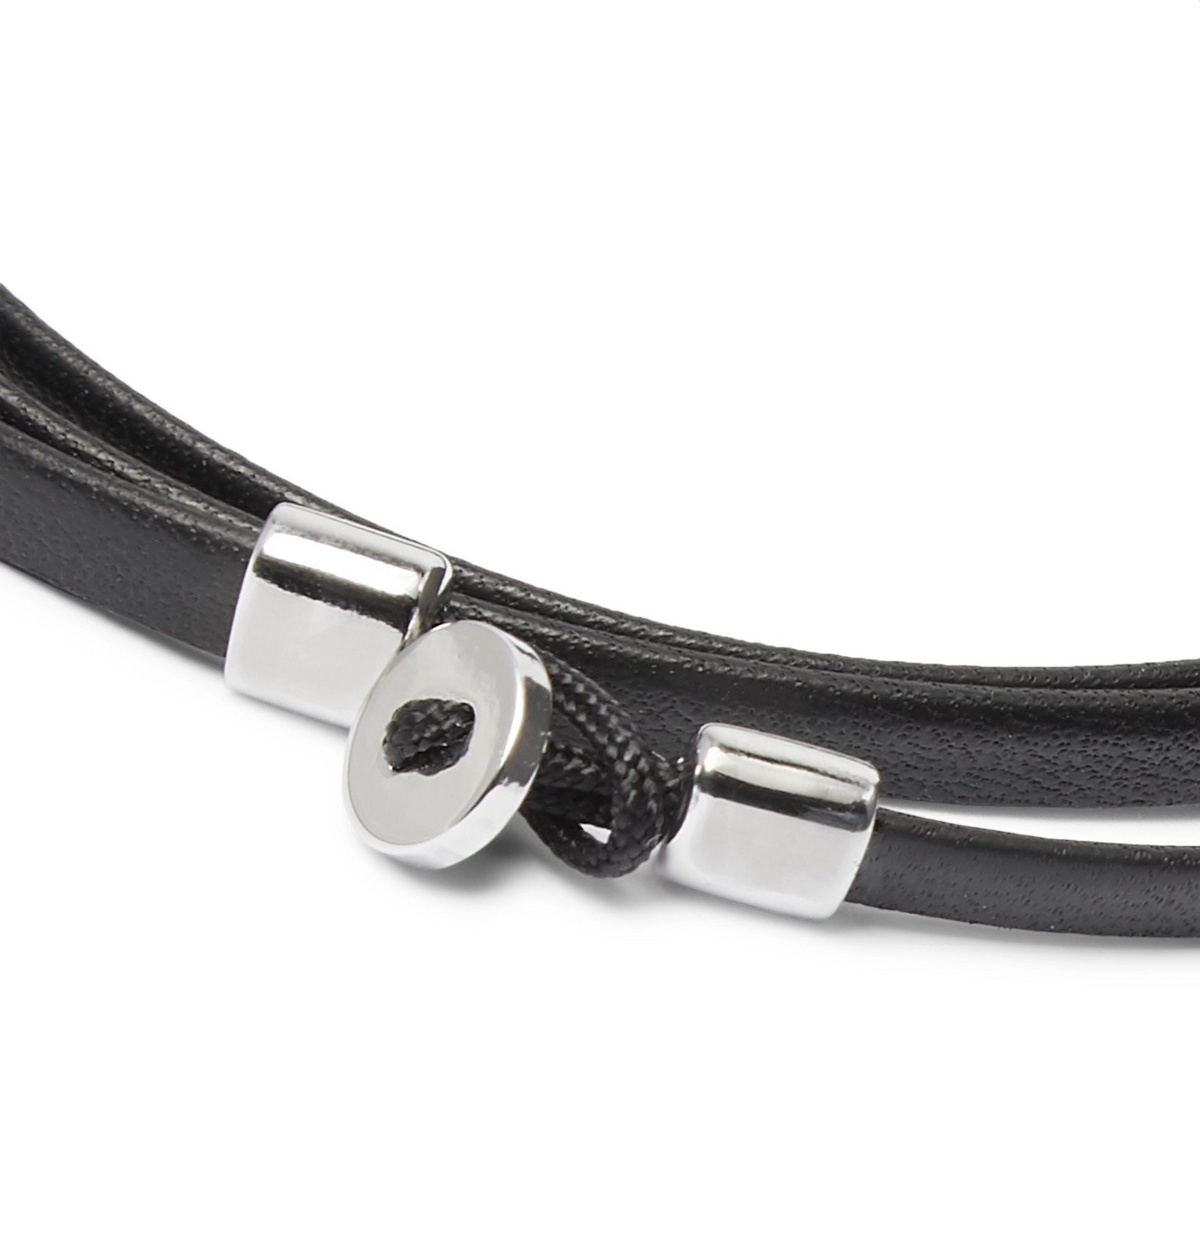 Miansai Nexus Leather Bracelet